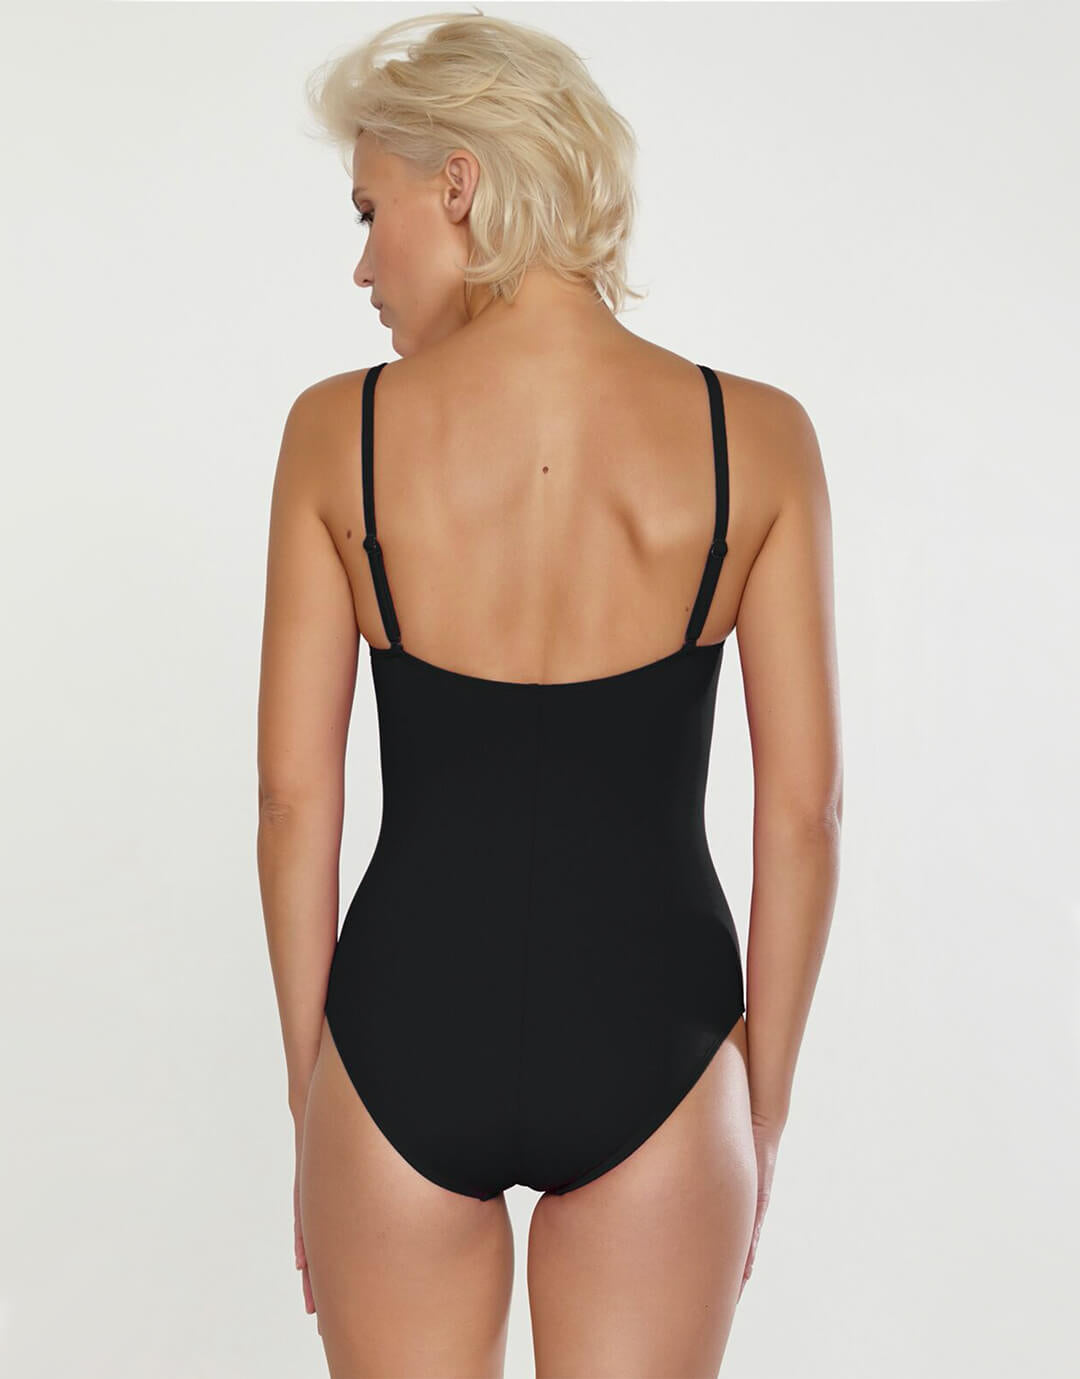 Softline Wrap Swimsuit - Black - Simply Beach UK